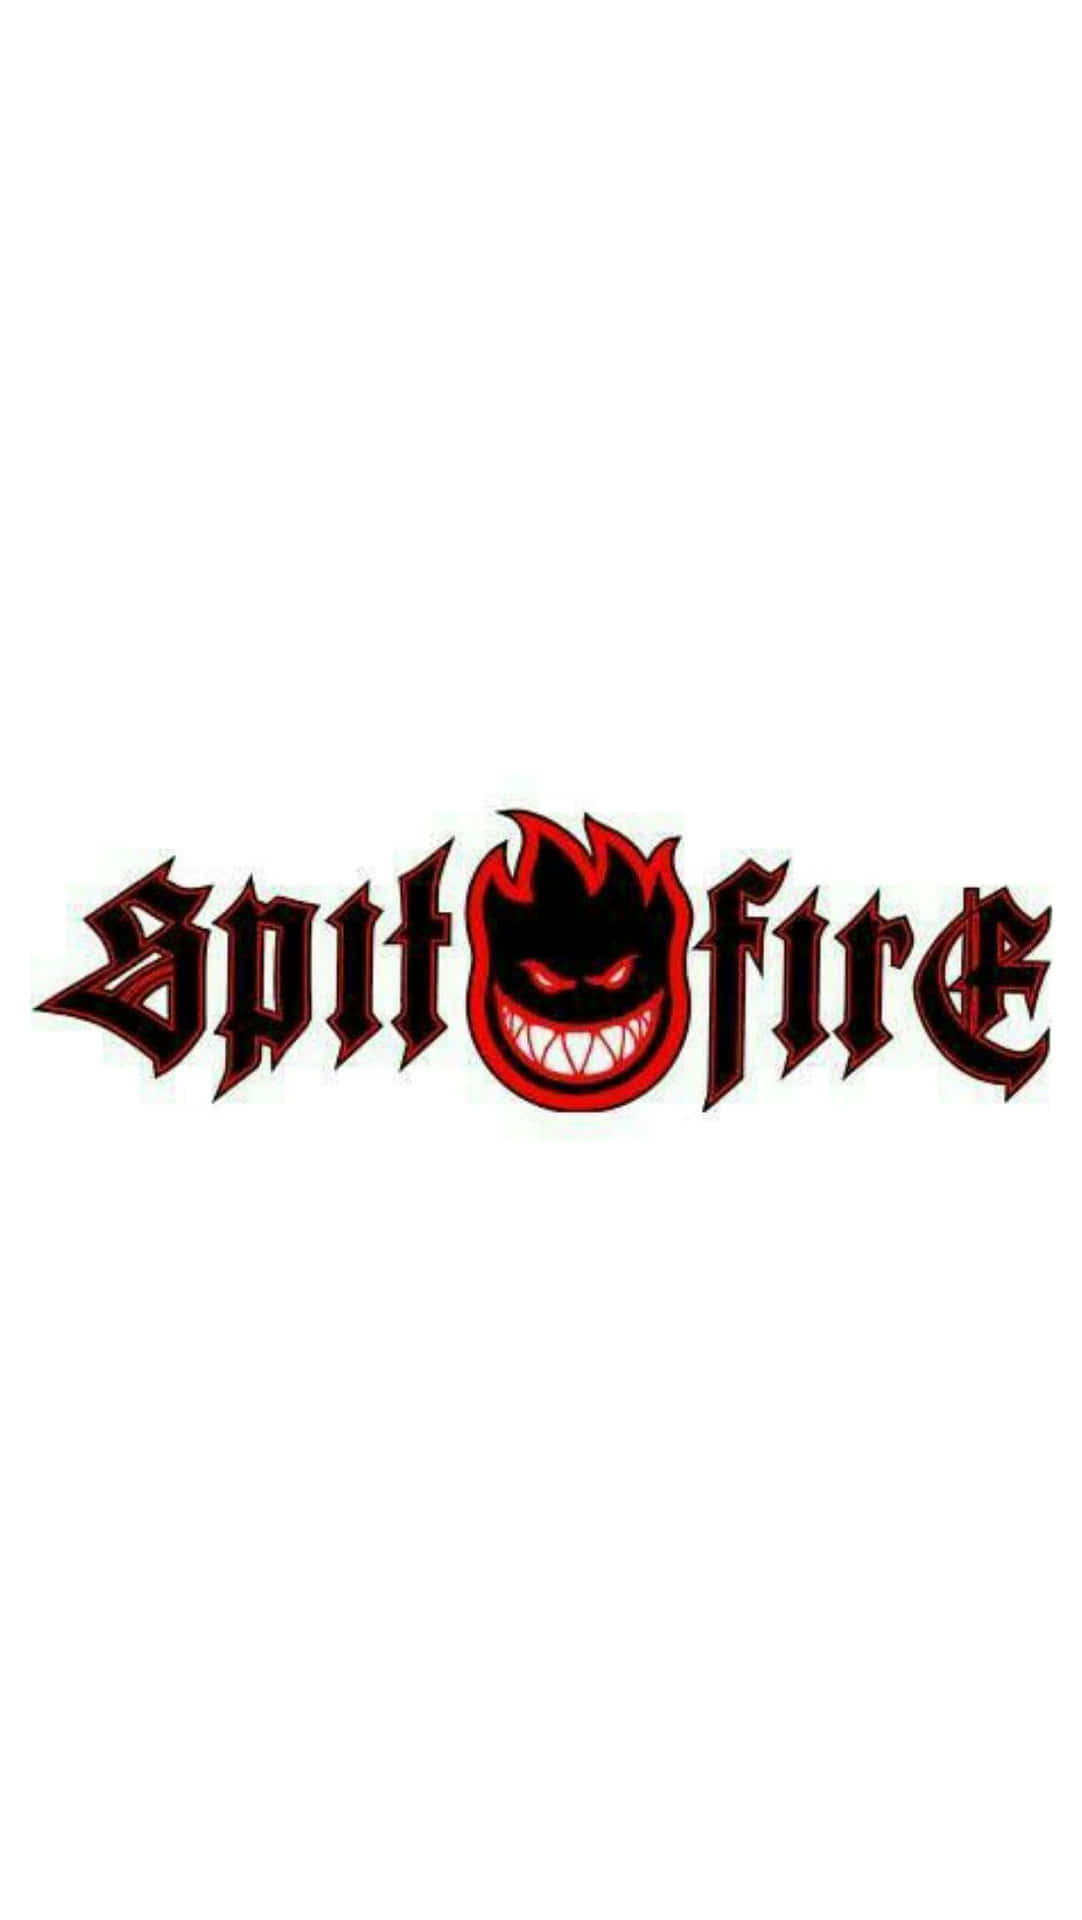 Spitfireskate Logotype (spitfire Skate Logotyp) Wallpaper